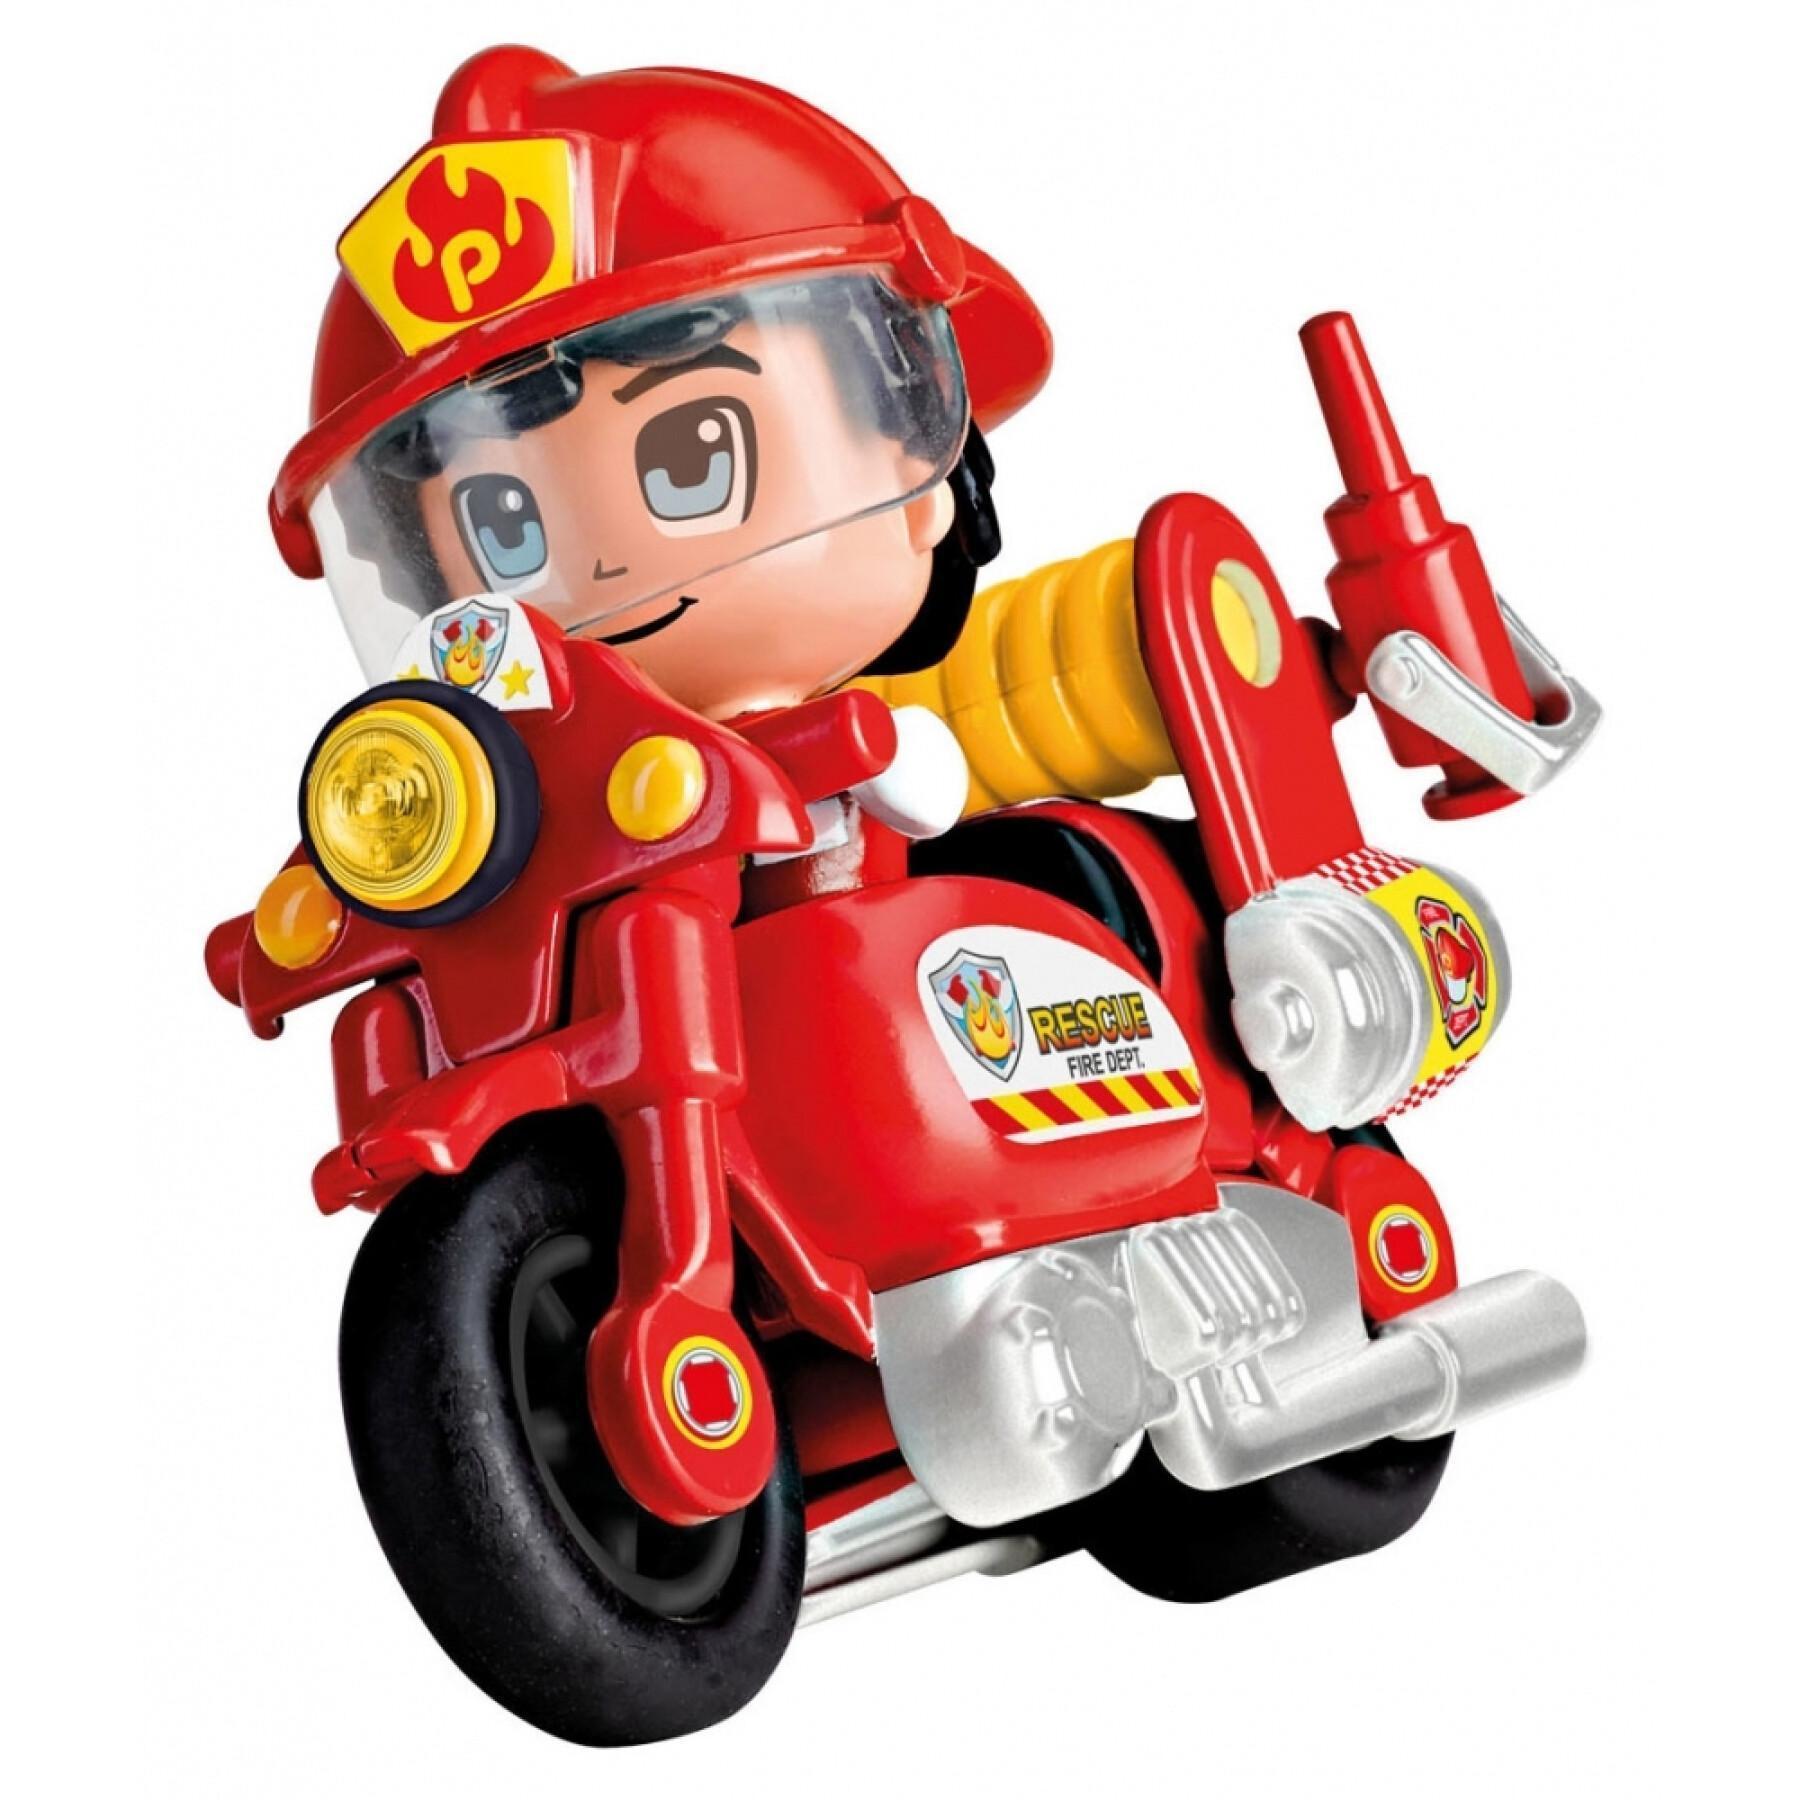 Fireman's motorcycle Pinypon